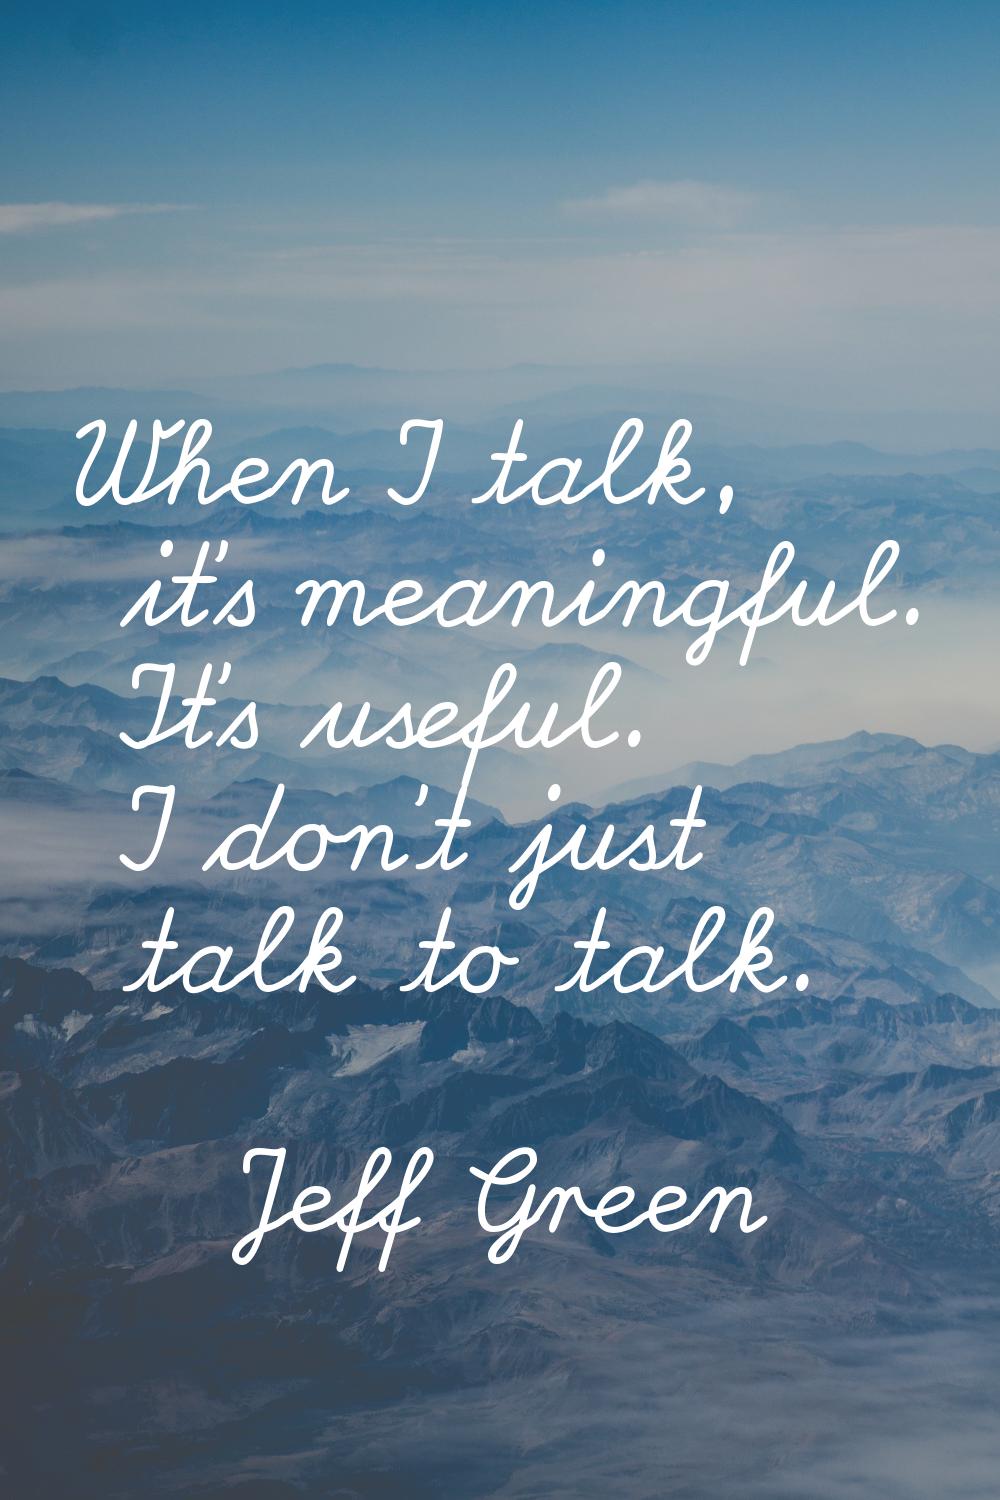 When I talk, it's meaningful. It's useful. I don't just talk to talk.